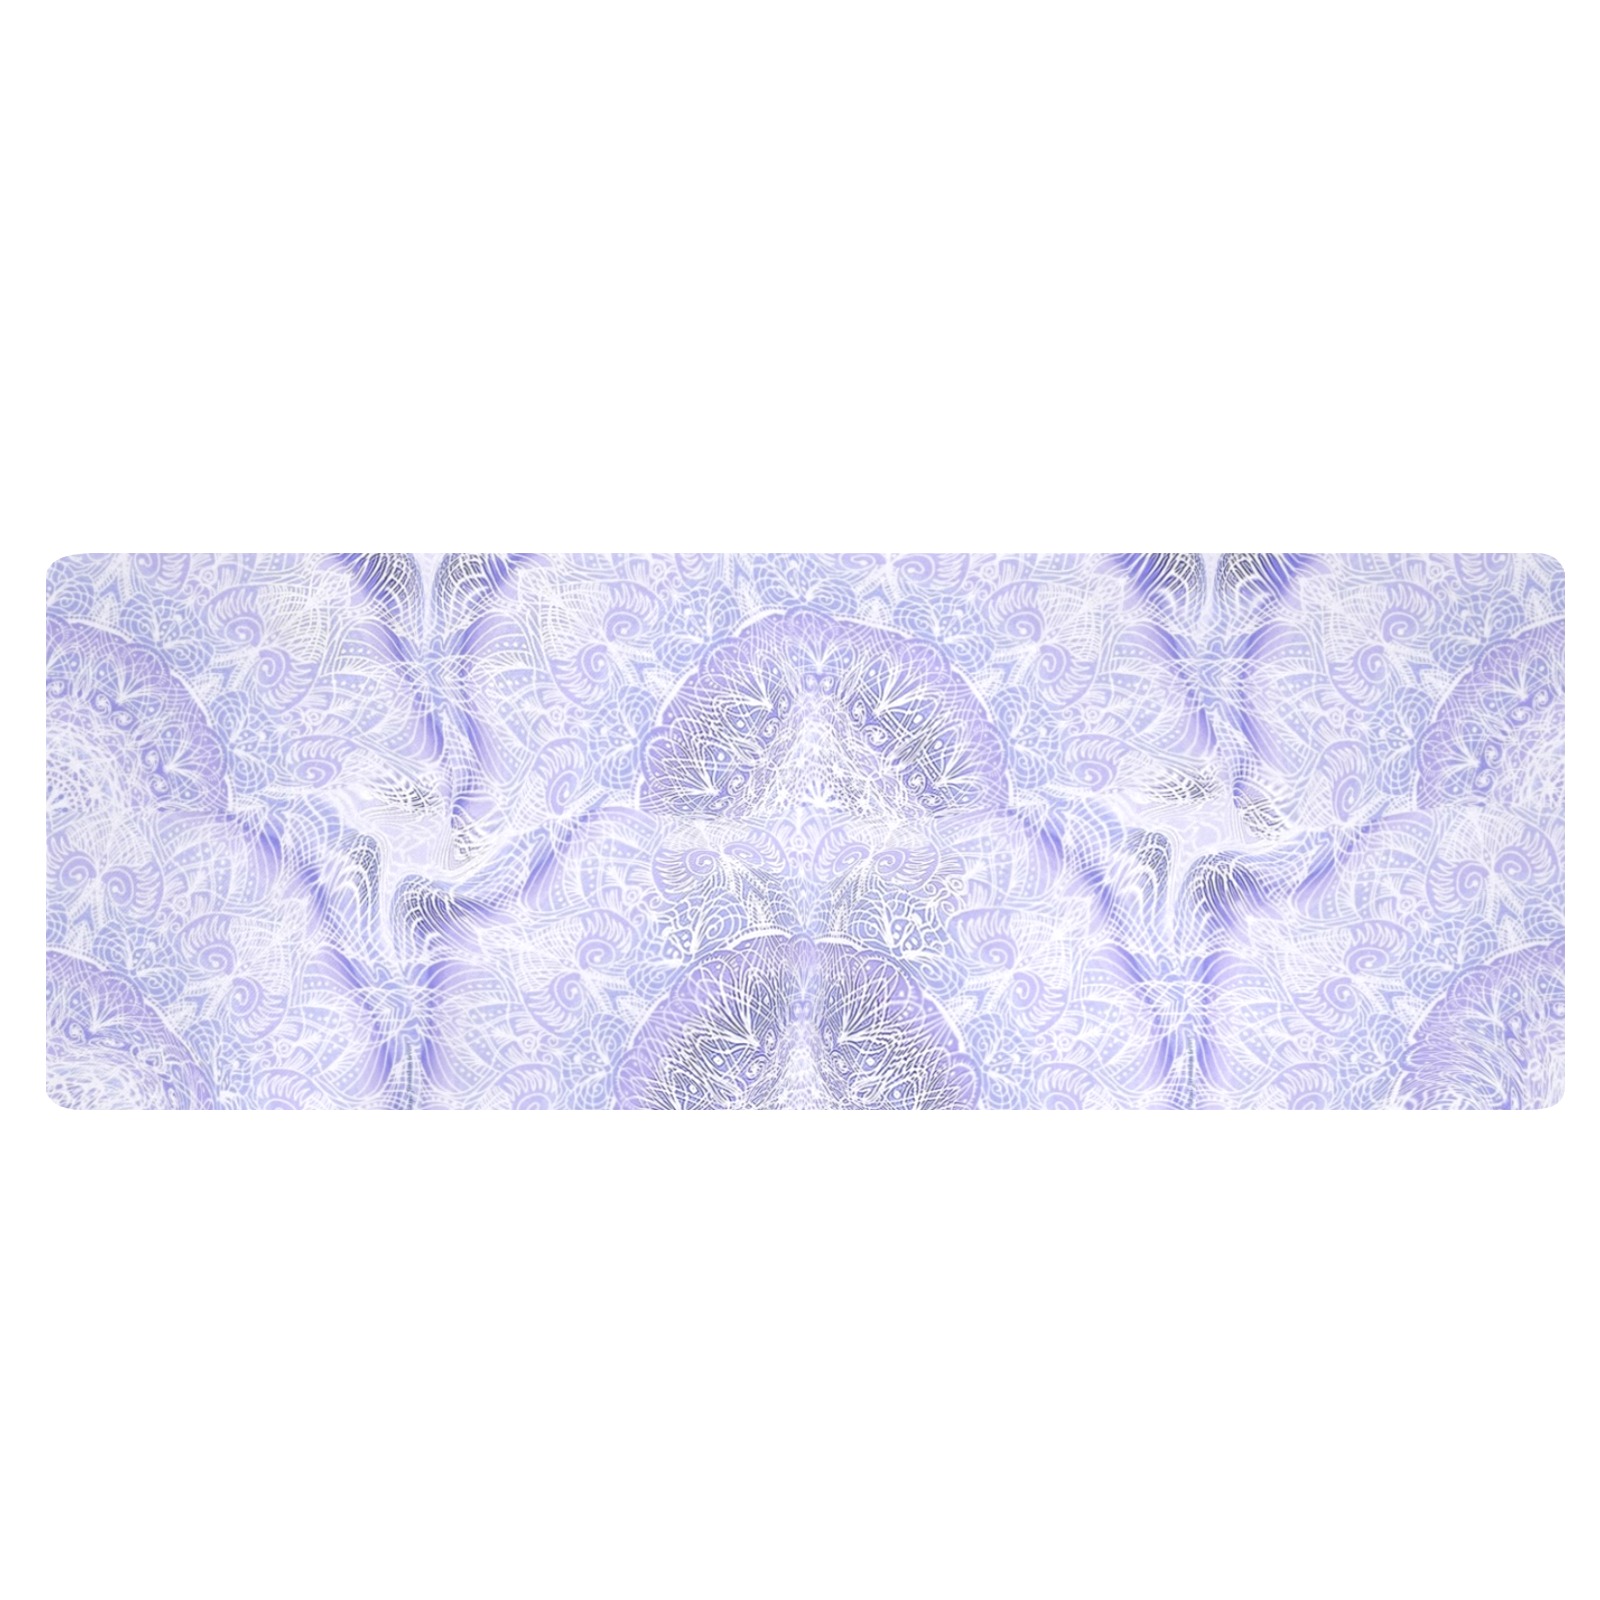 Nidhi December 2014-pattern 3-purple-44x55 inches Kitchen Mat 48"x17"